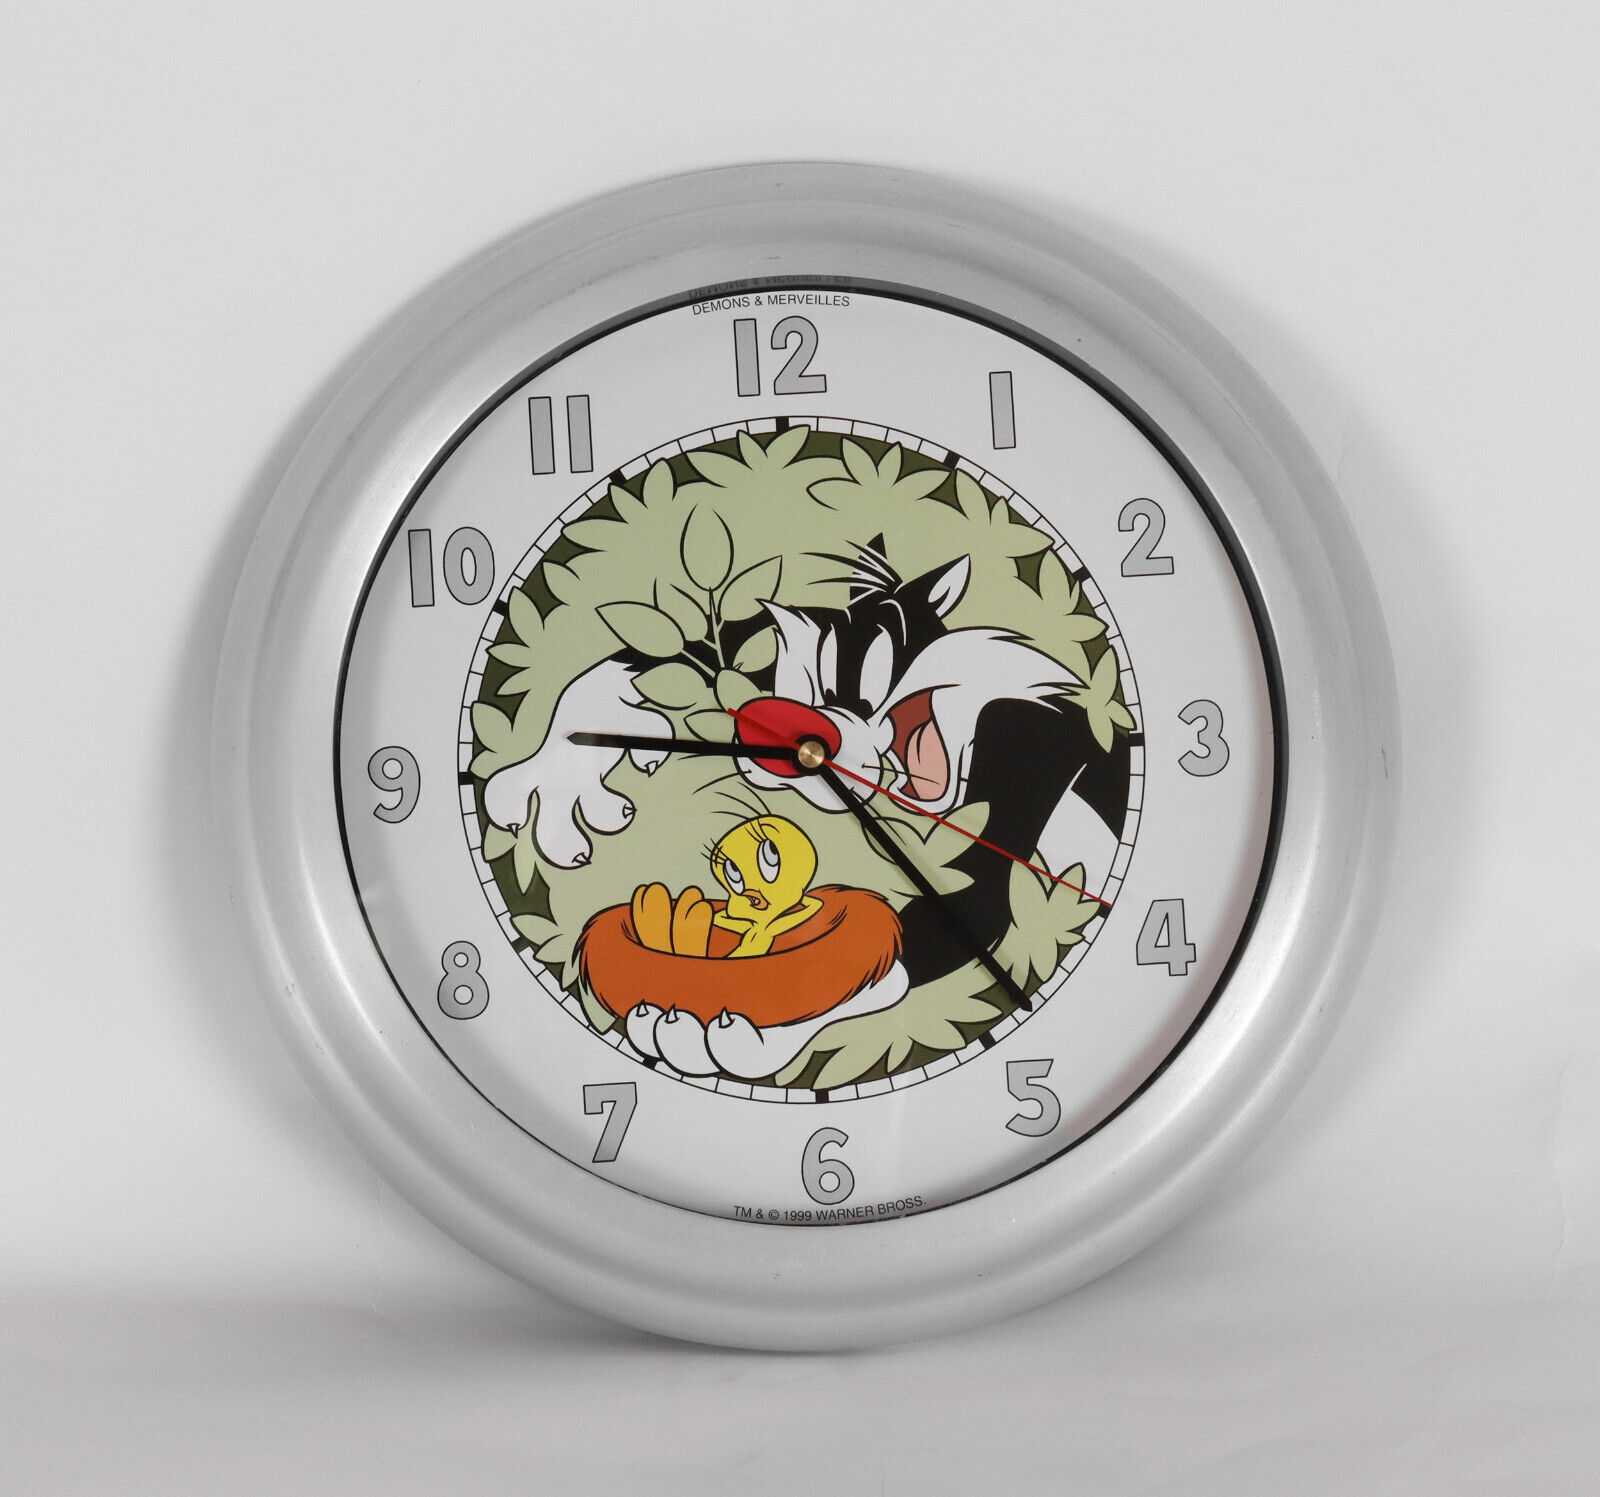 Extremely rare Demons & Merveilles clock Tweety & Sylvester Warner Bros. 1999